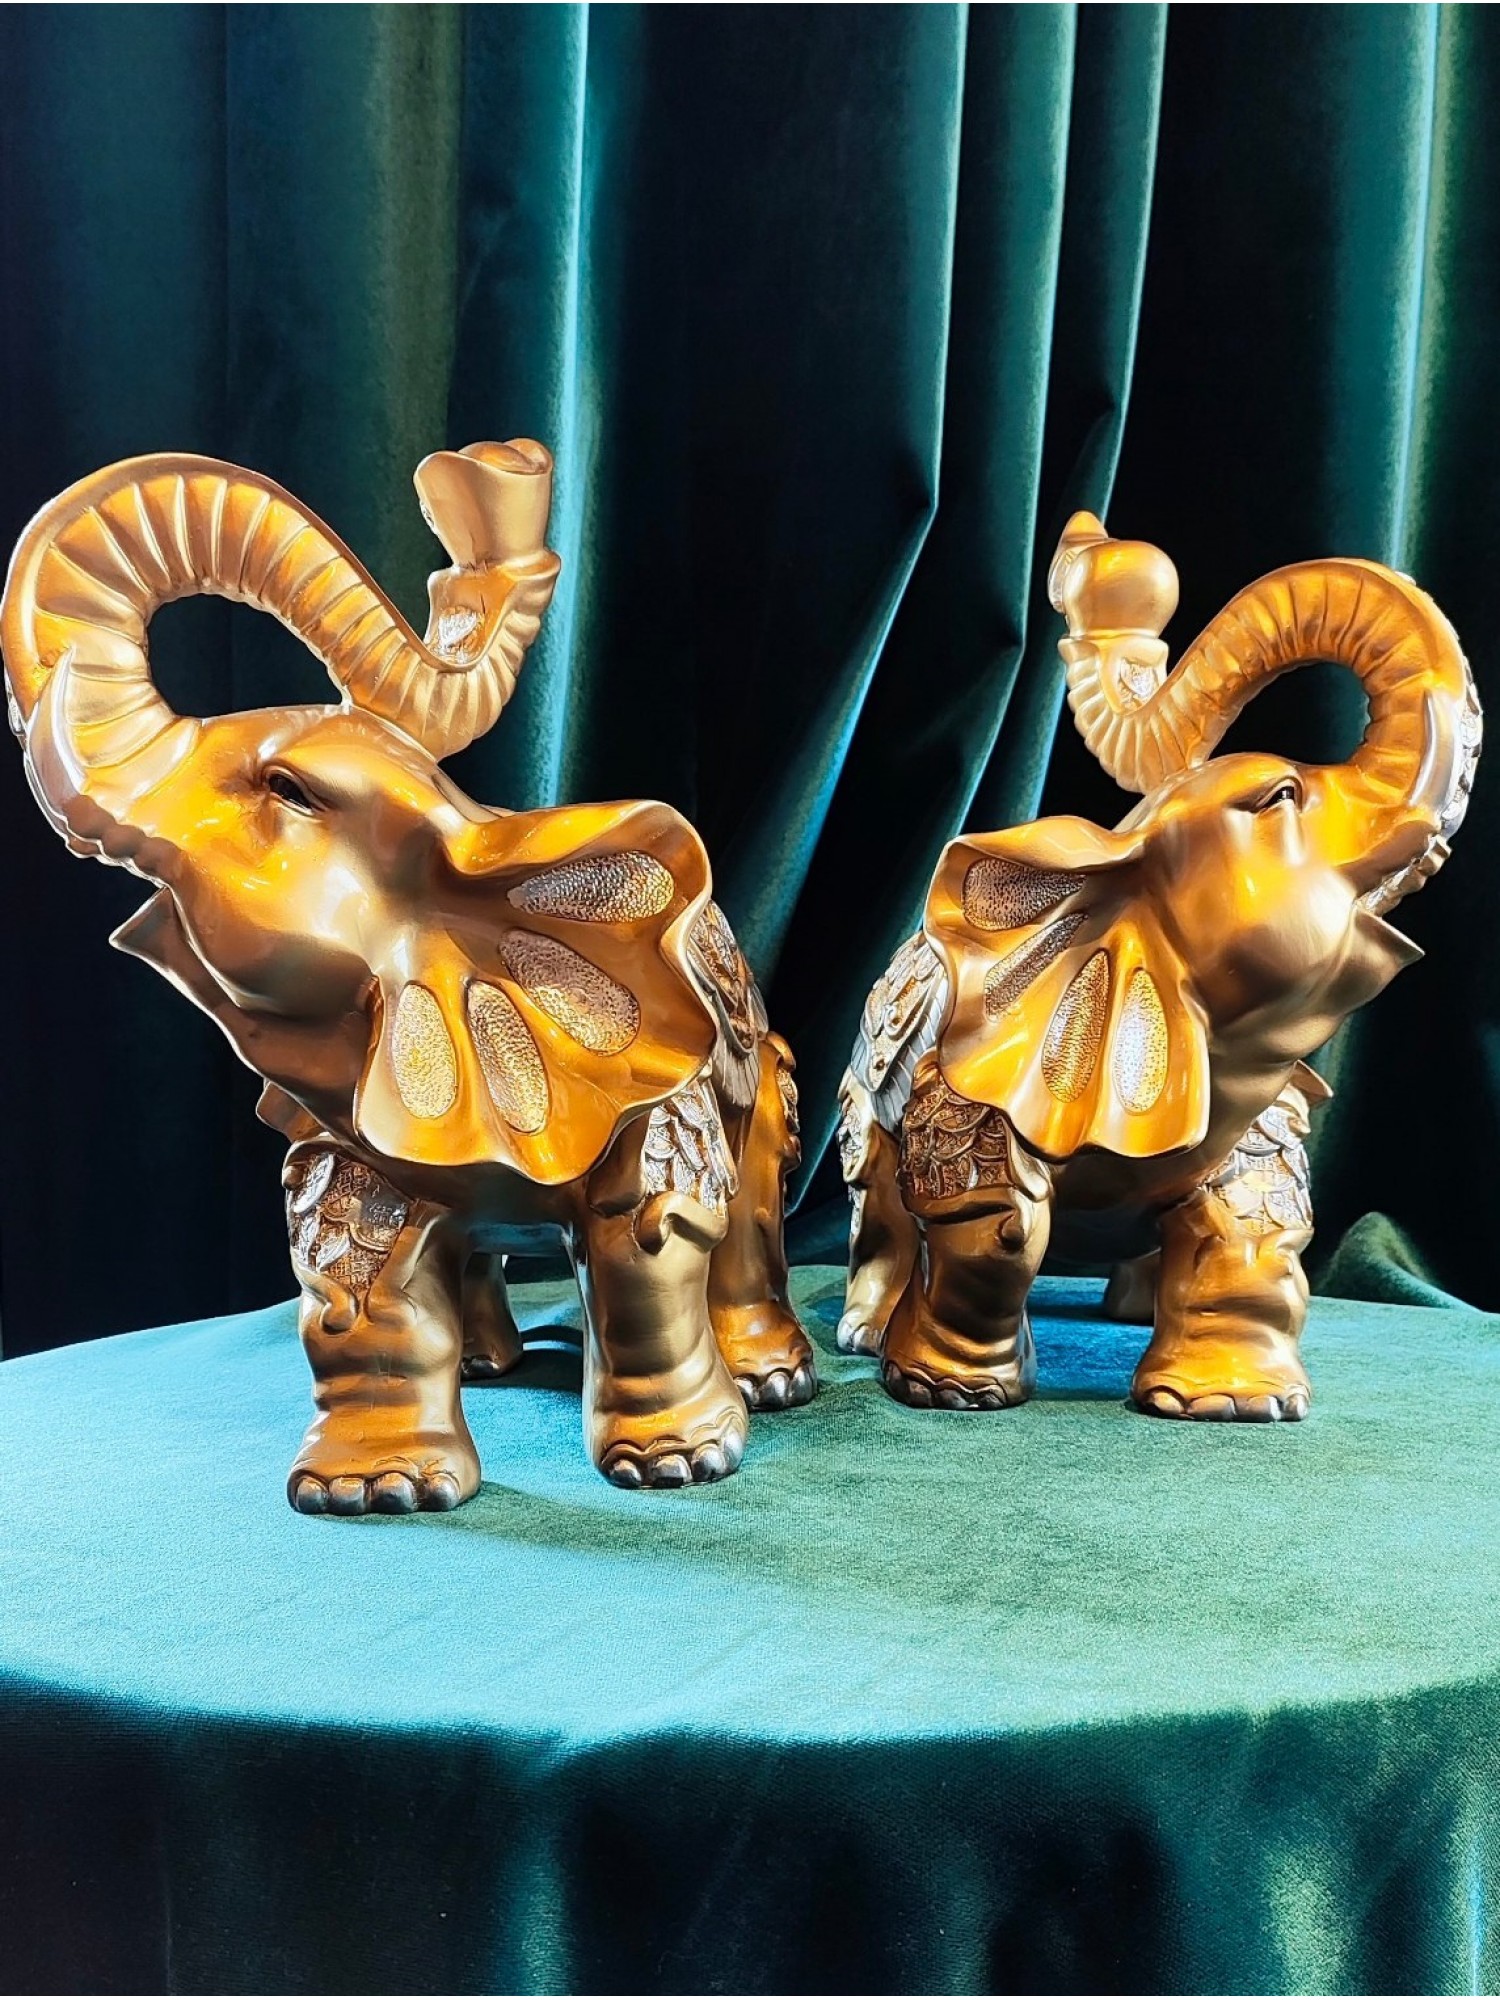 Пара слонов - символ мудрости и преодоления преград